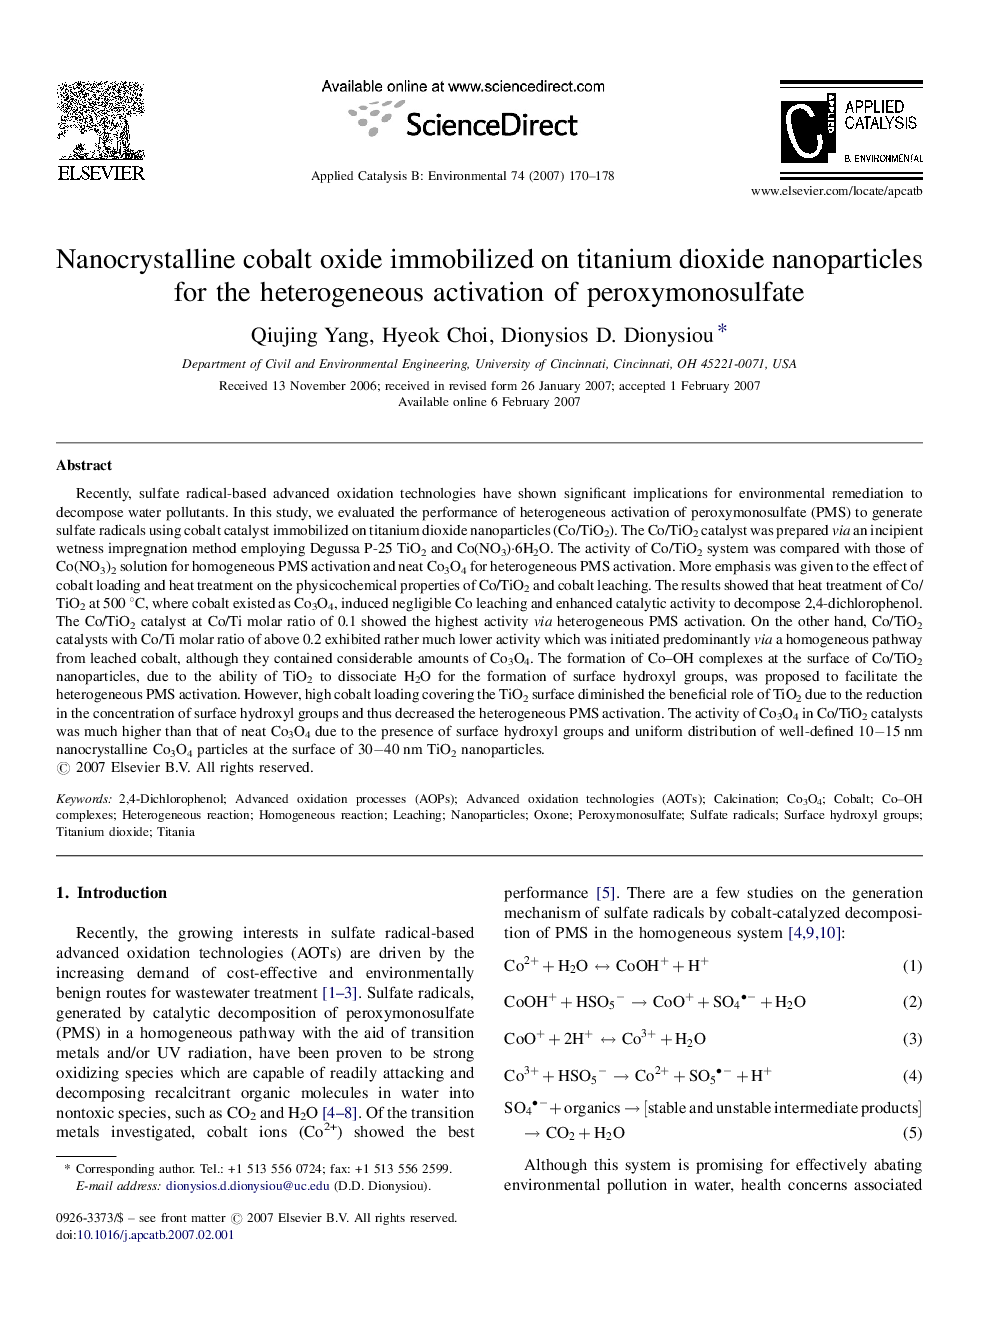 Nanocrystalline cobalt oxide immobilized on titanium dioxide nanoparticles for the heterogeneous activation of peroxymonosulfate